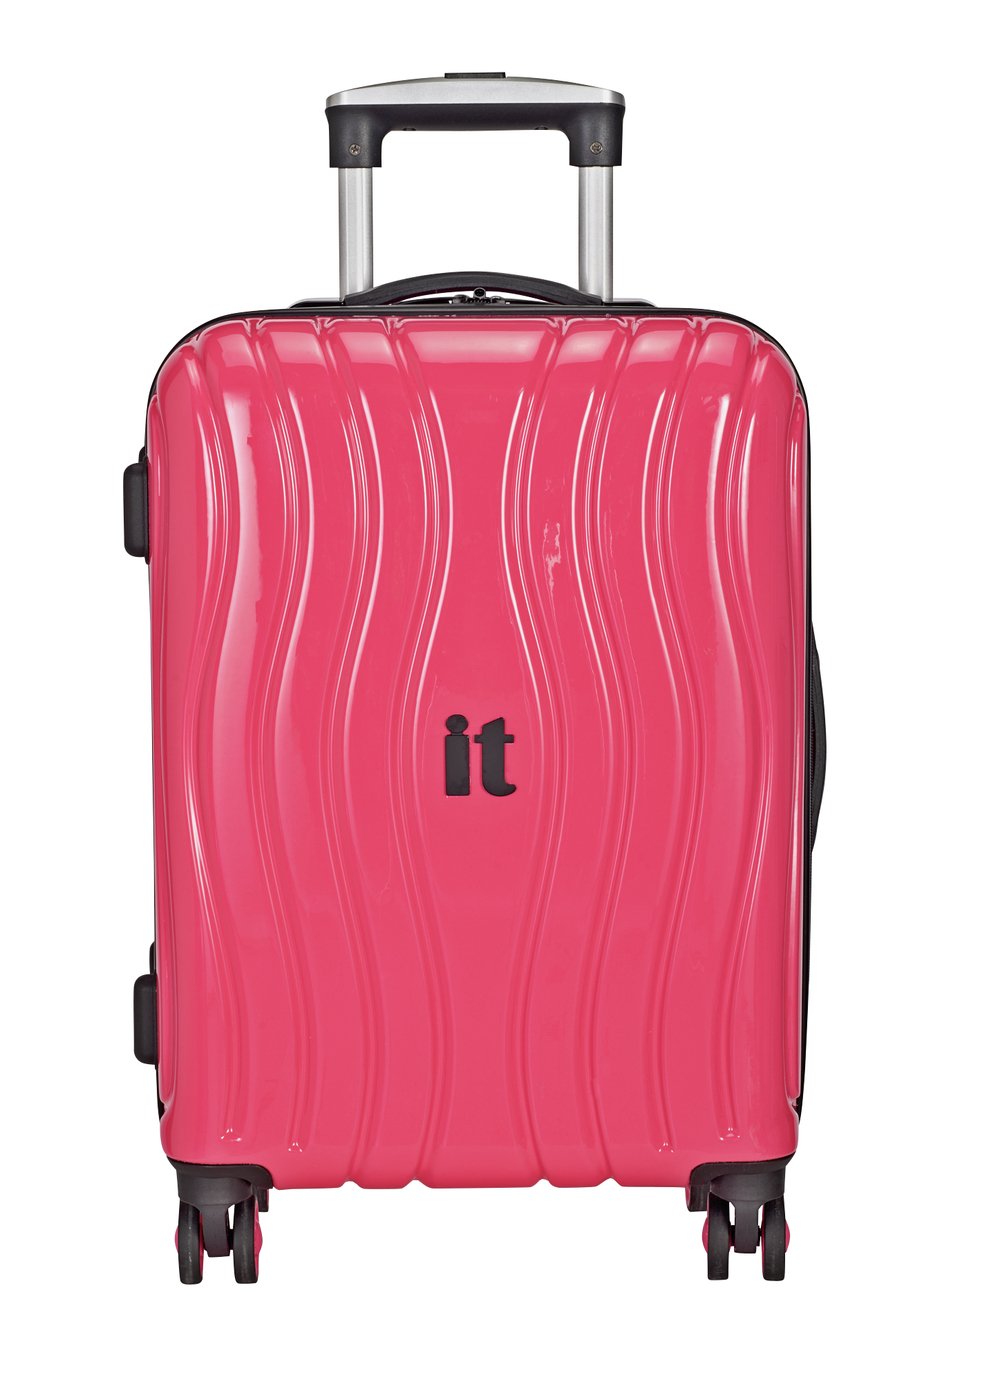 IT Luggage 8 Wheel Hard Cabin Suitcase - Metallic Pink